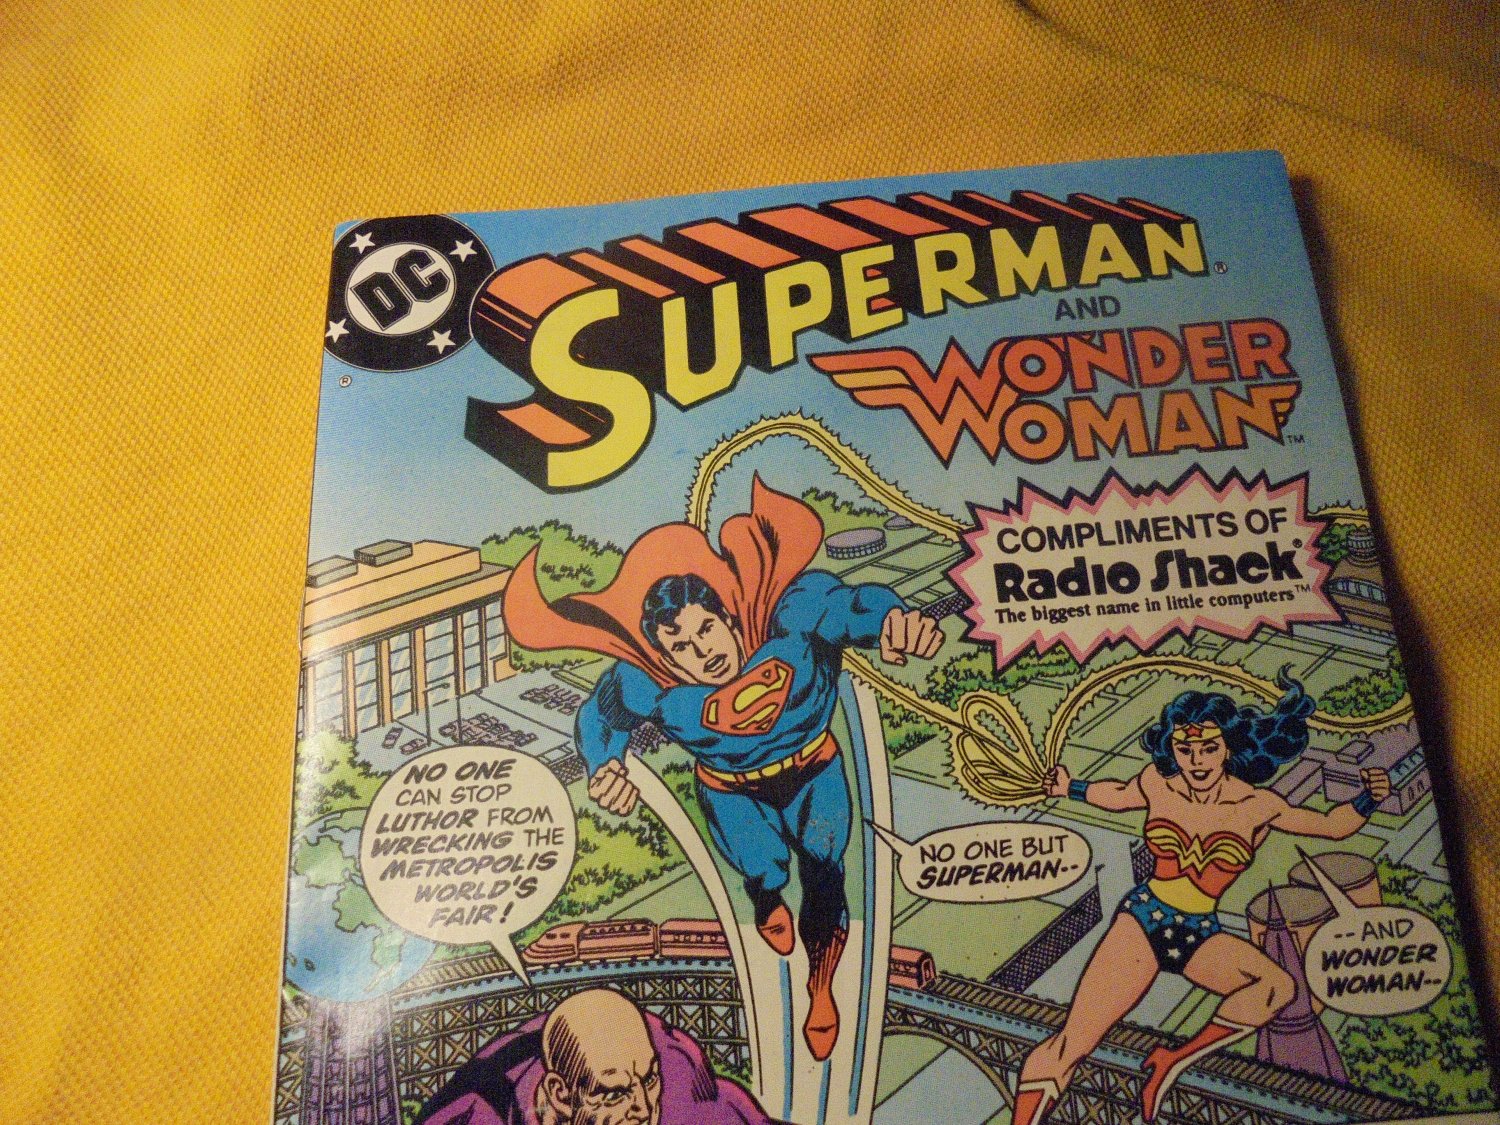 SUPERMAN & WONDER WOMAN Radio Shack PROMOTIONAL COMIC BOOK, DC Comics, 1982!! Asking $5.00 OBO!!